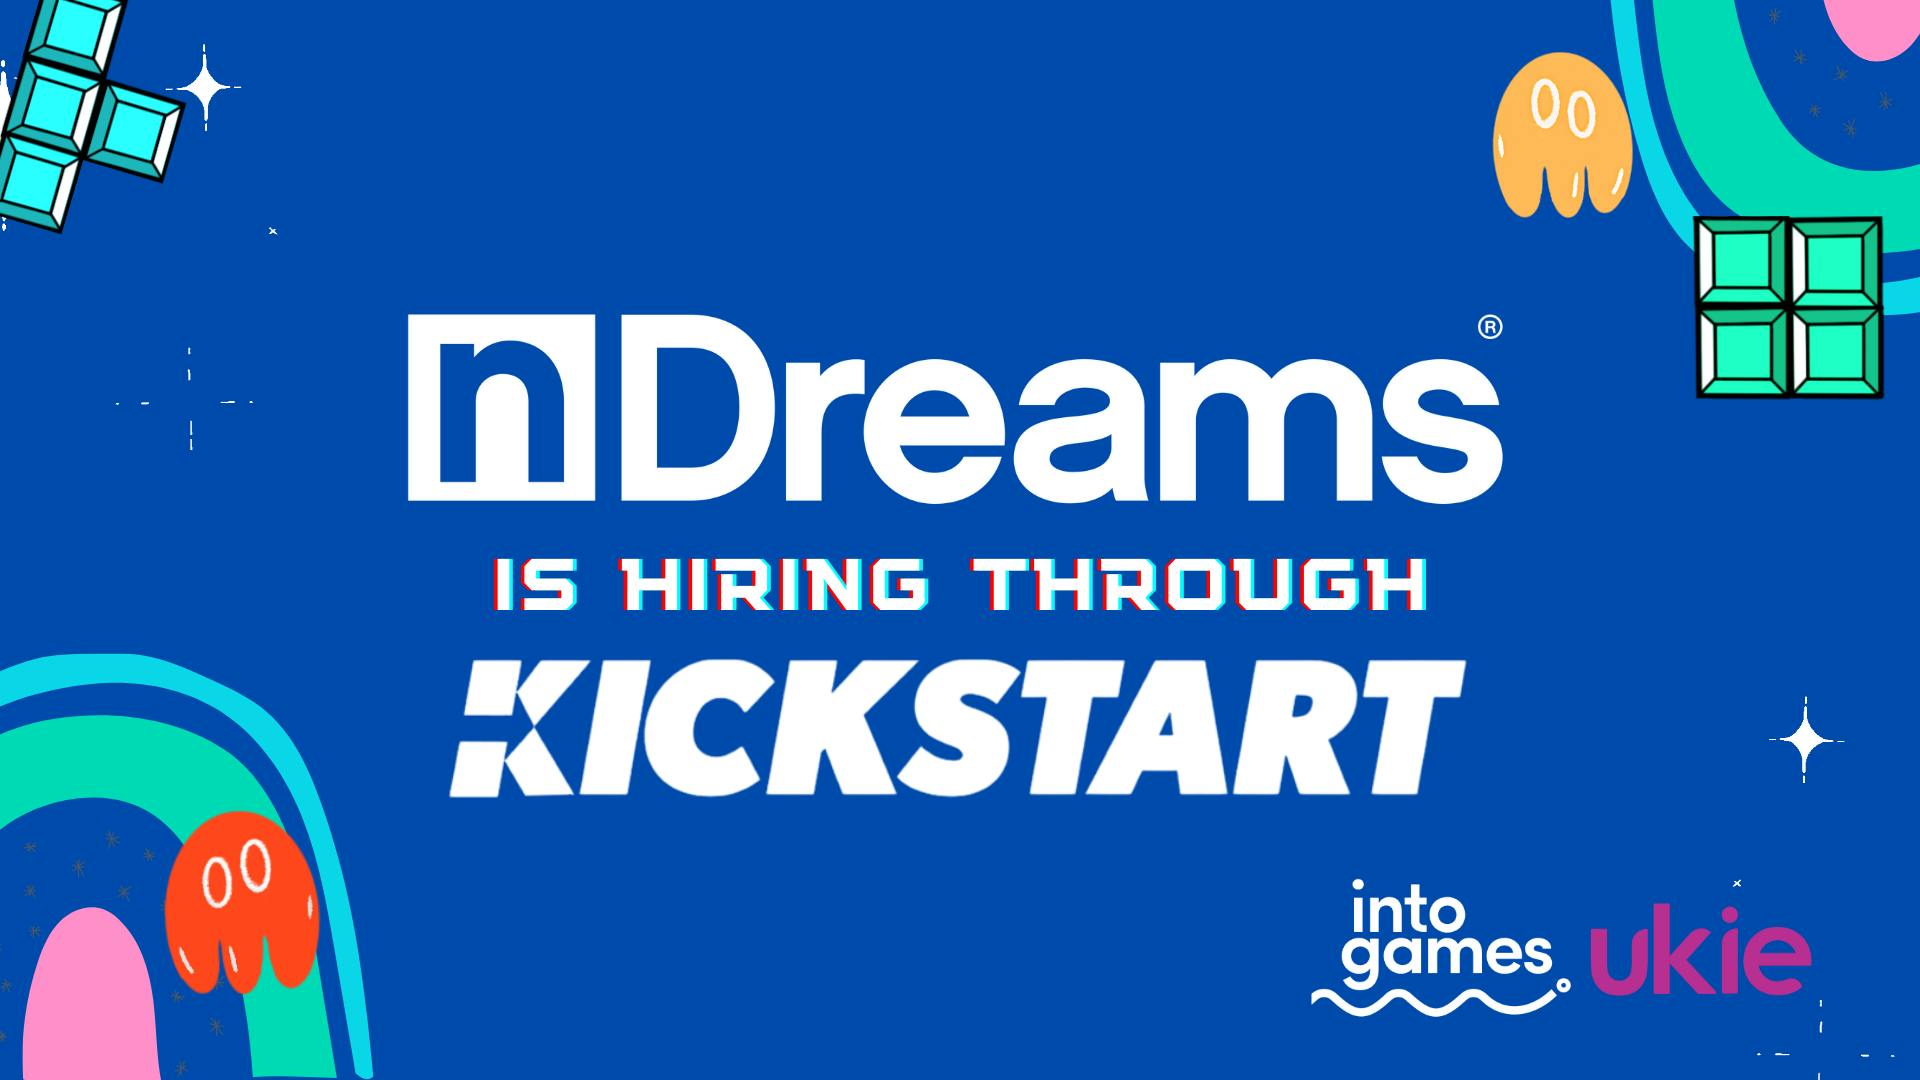 nDreams - We're Hiring Through the Kickstart Scheme